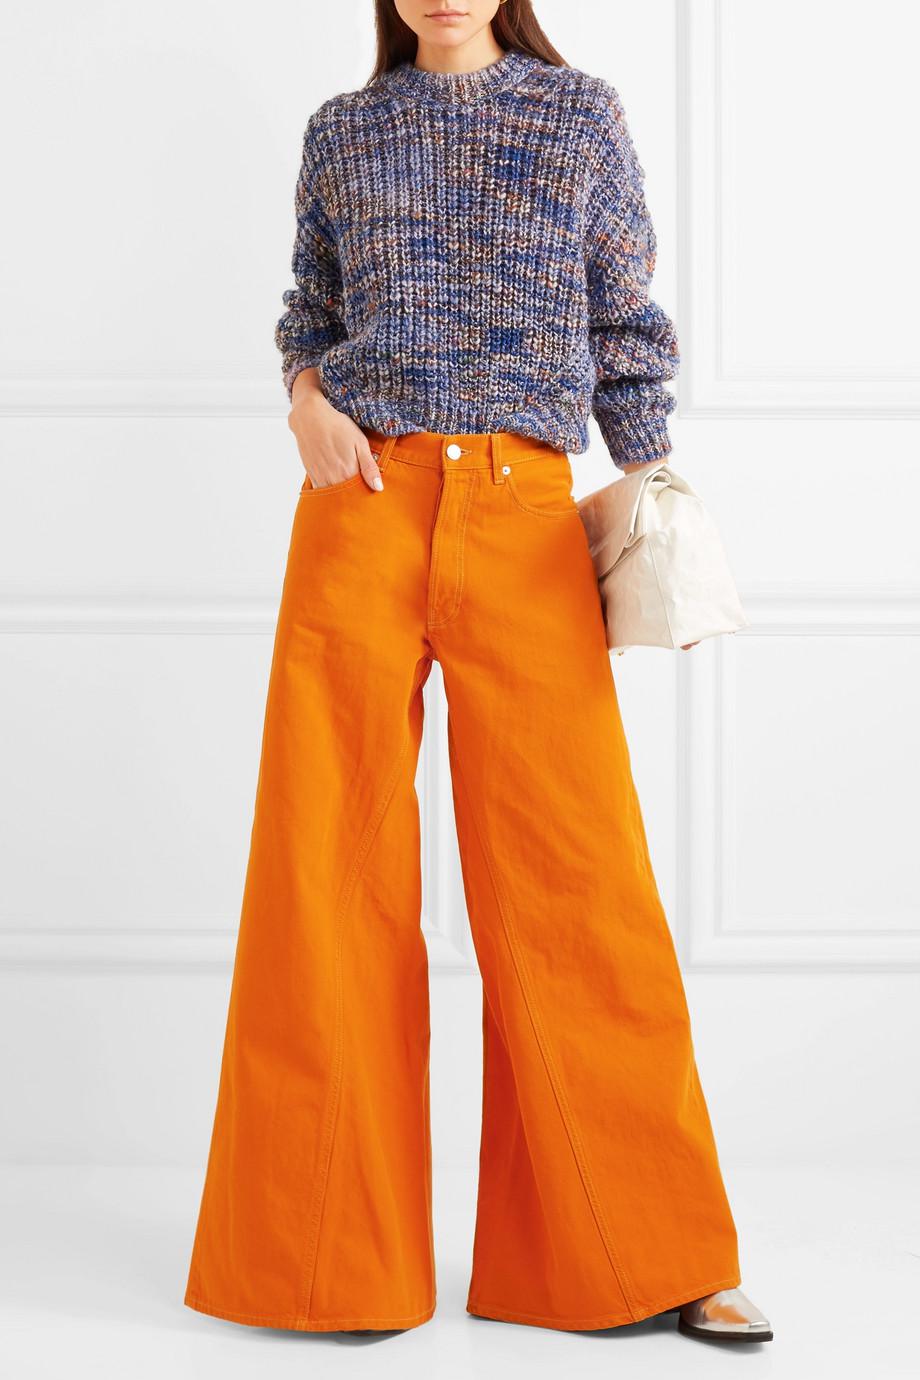 Ganni Denim Paneled Jeans in Orange - Lyst